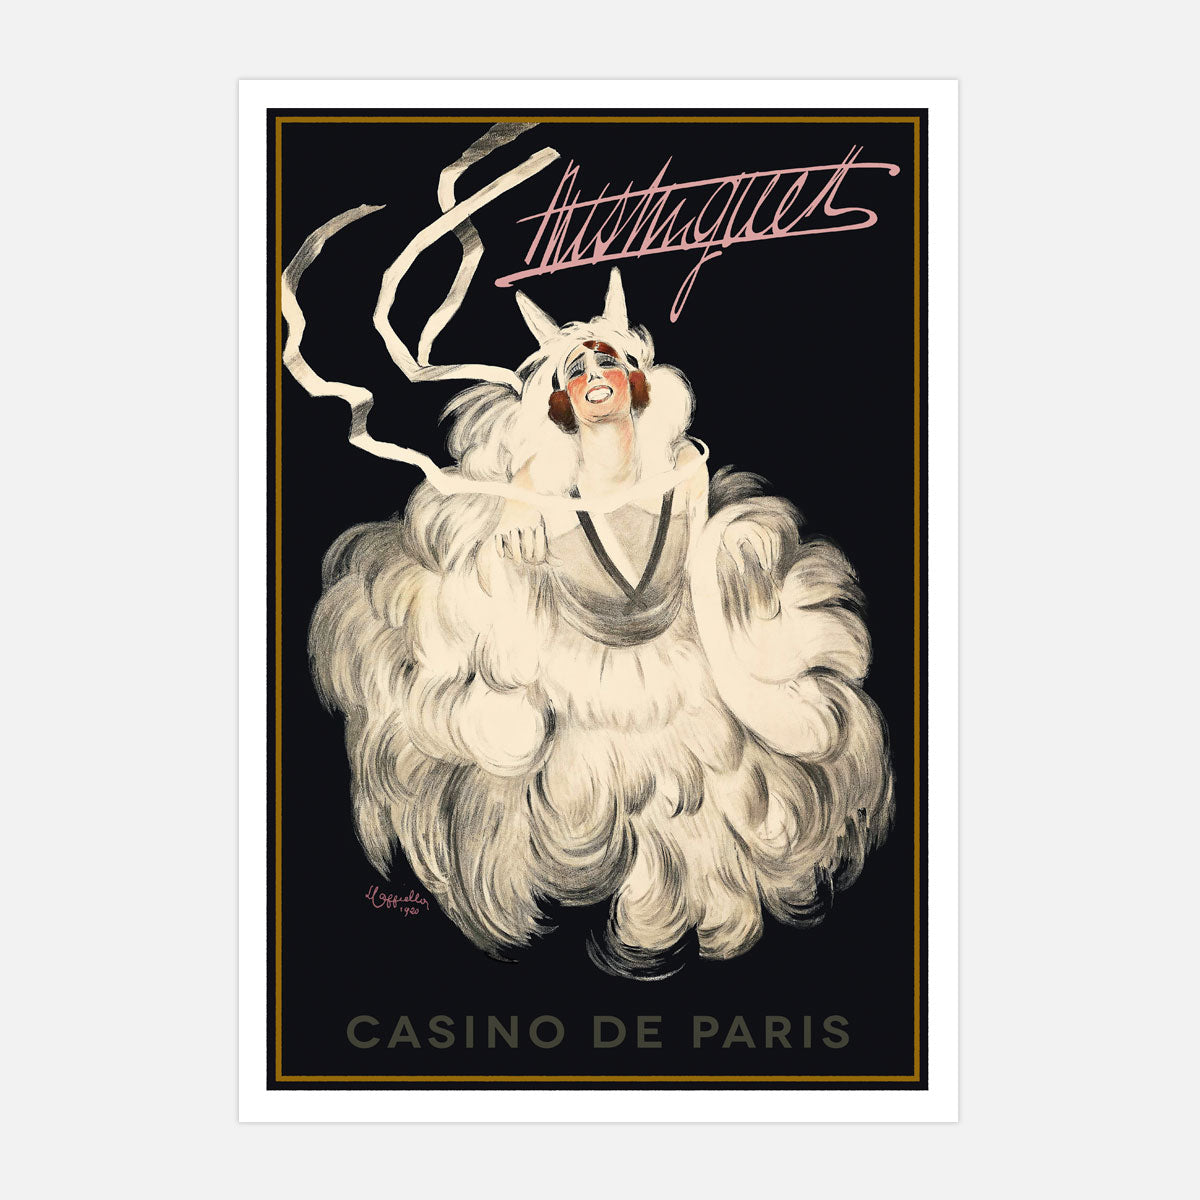 Casino de Paris retro vintage advertising print from Places We Luv